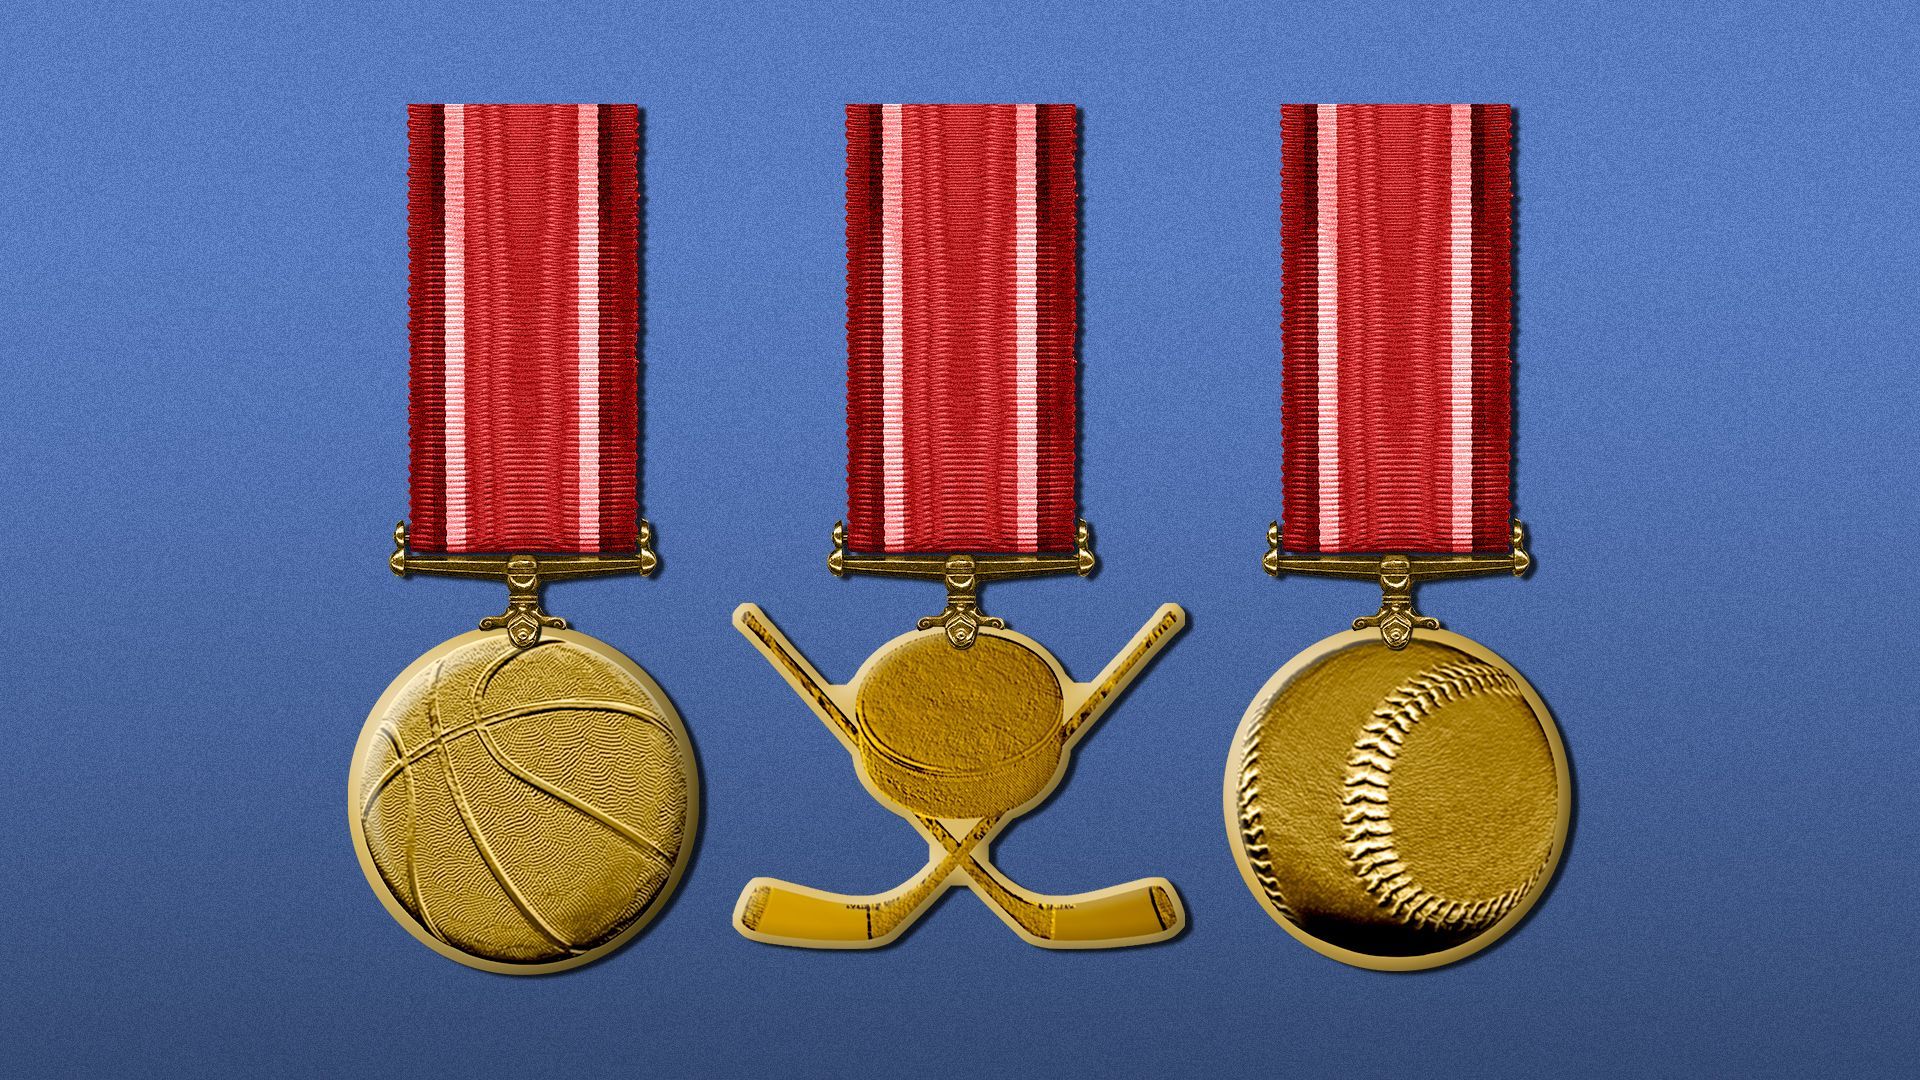 Illustration of sports symbols as medals.